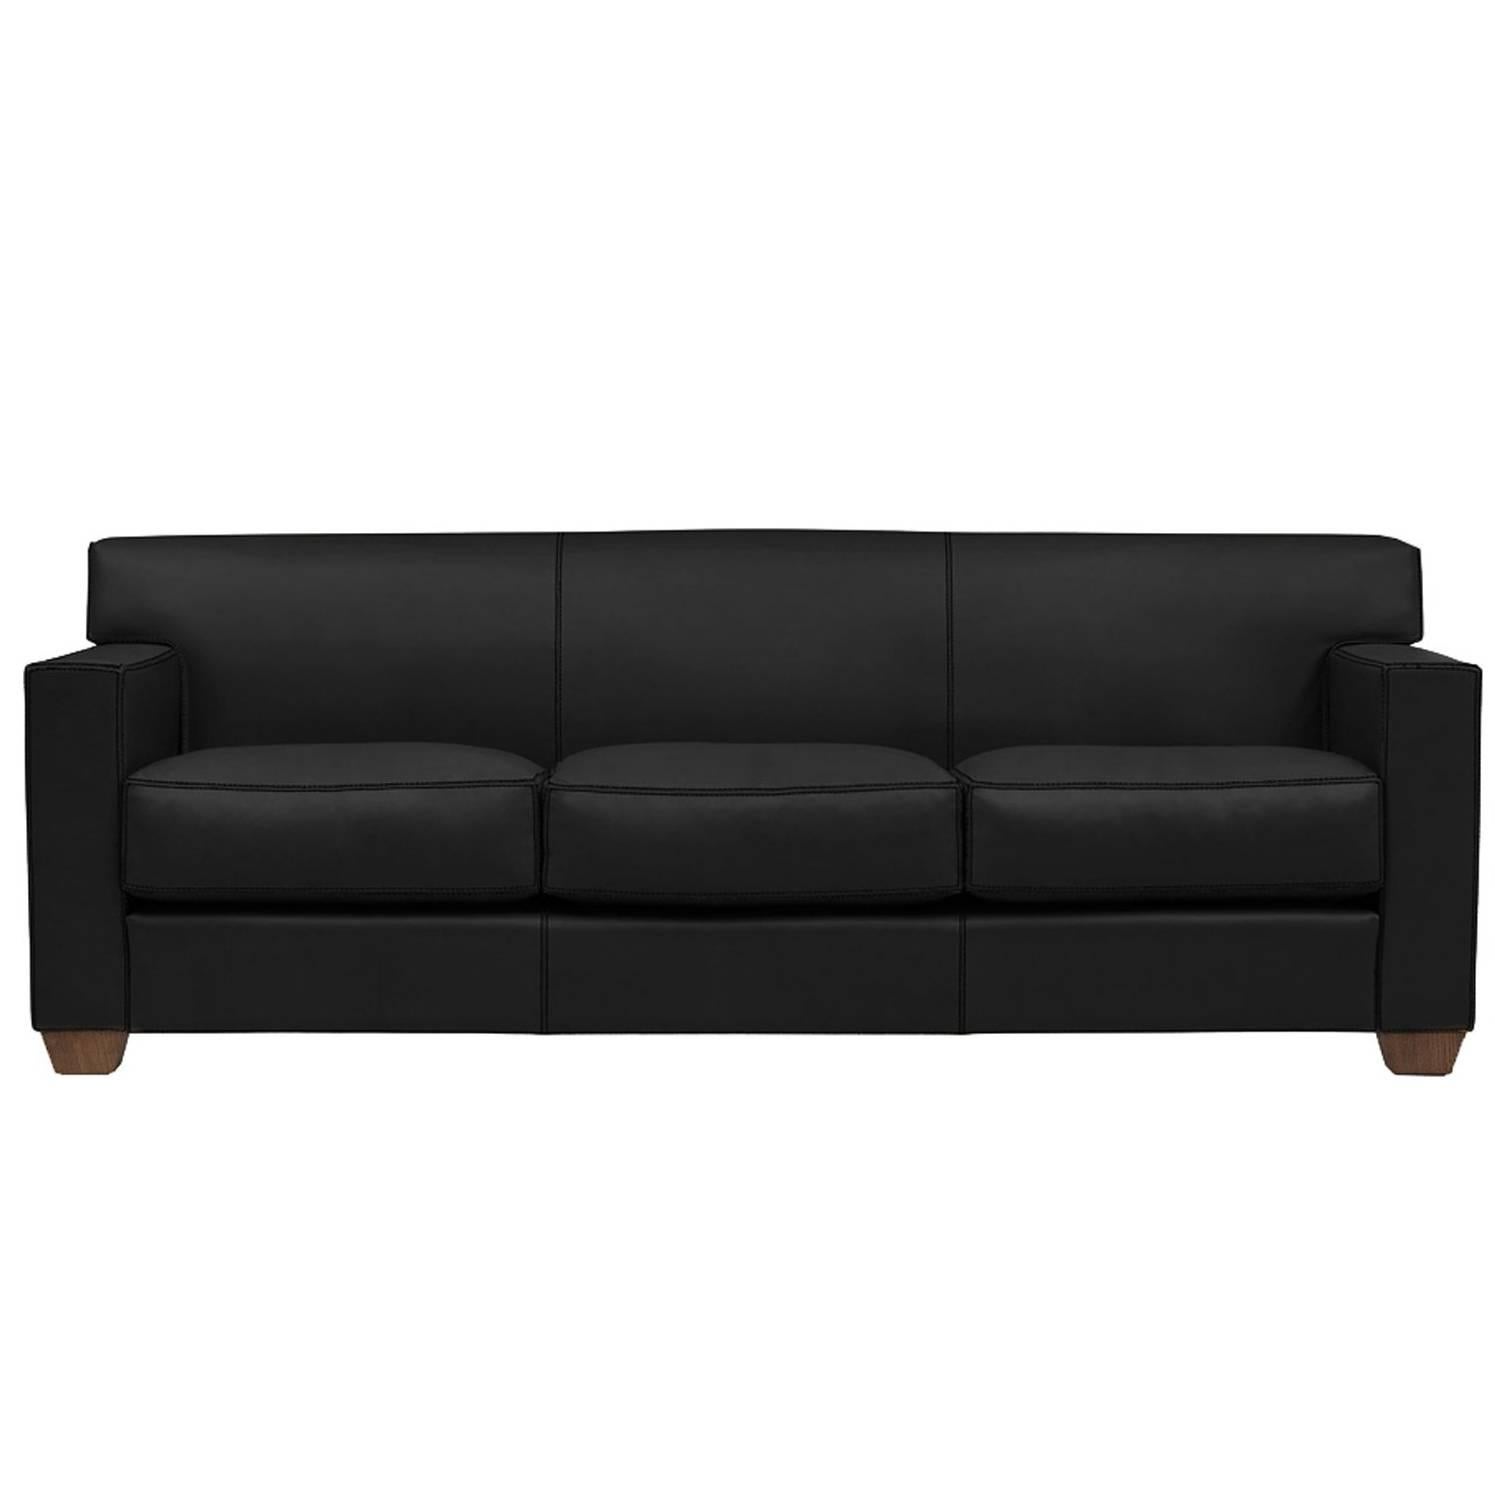 Jean-Michel Frank & Hermès, a Black Leather Sofa, 21st Century For Sale